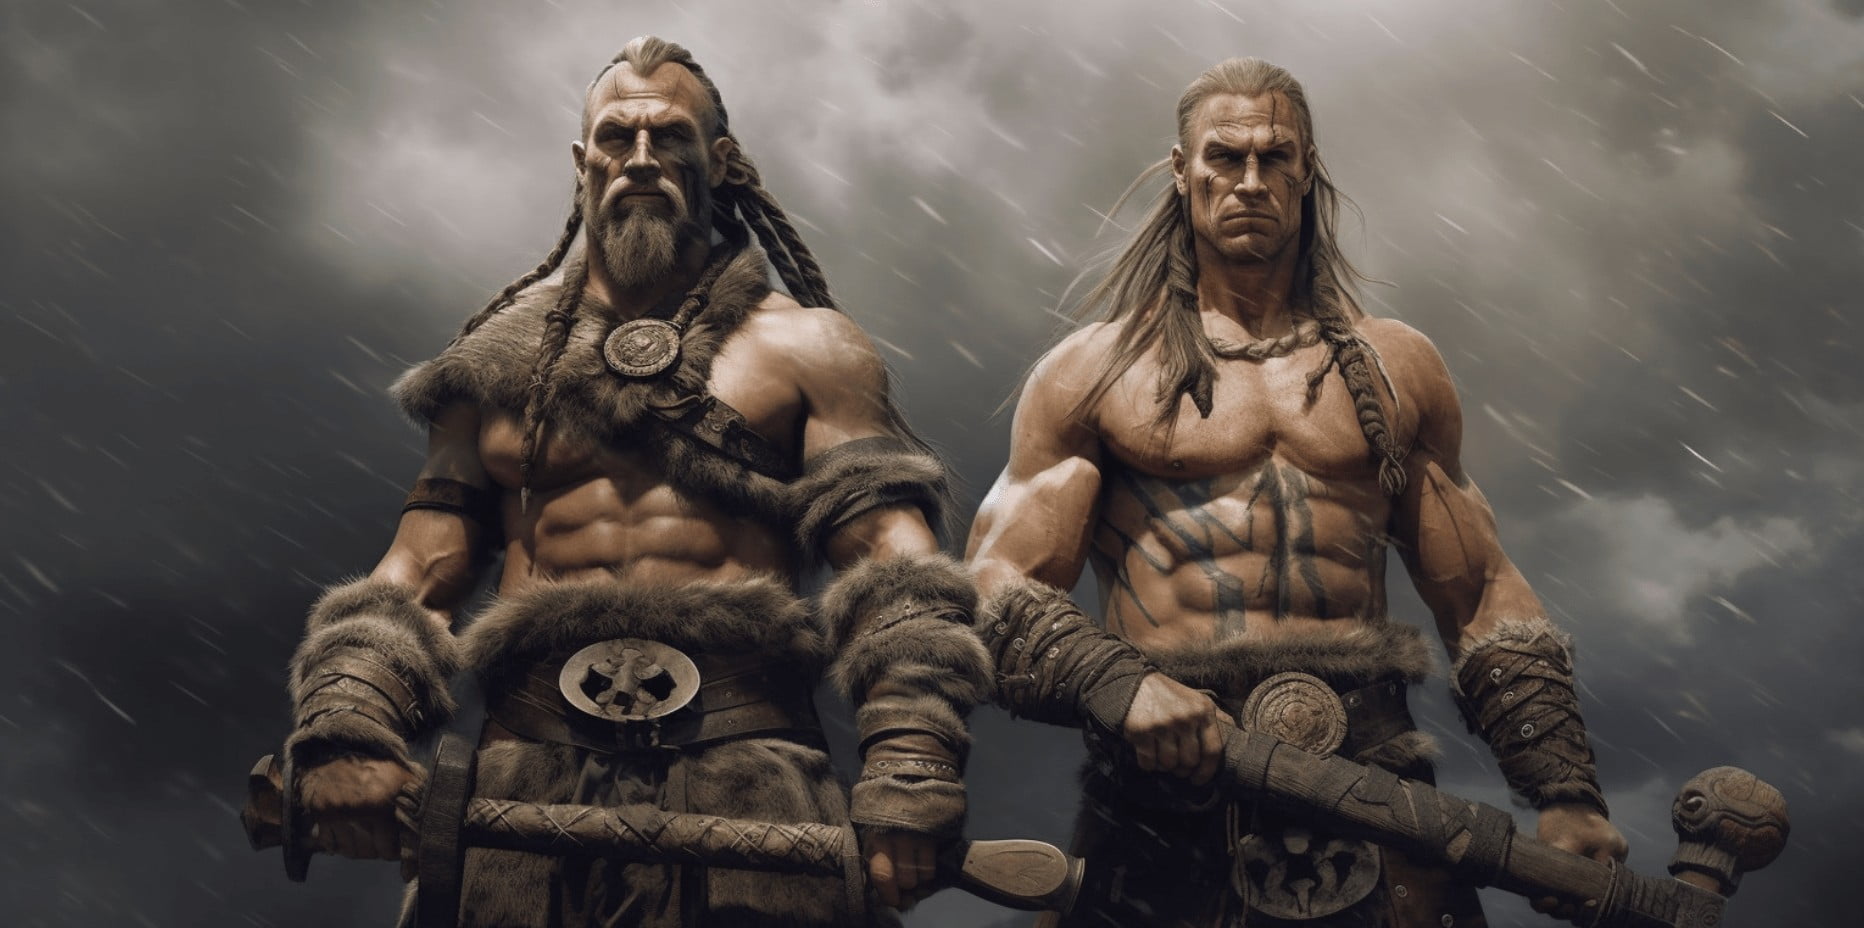 What Did The Vikings Look Like? Envisioning Viking Traits